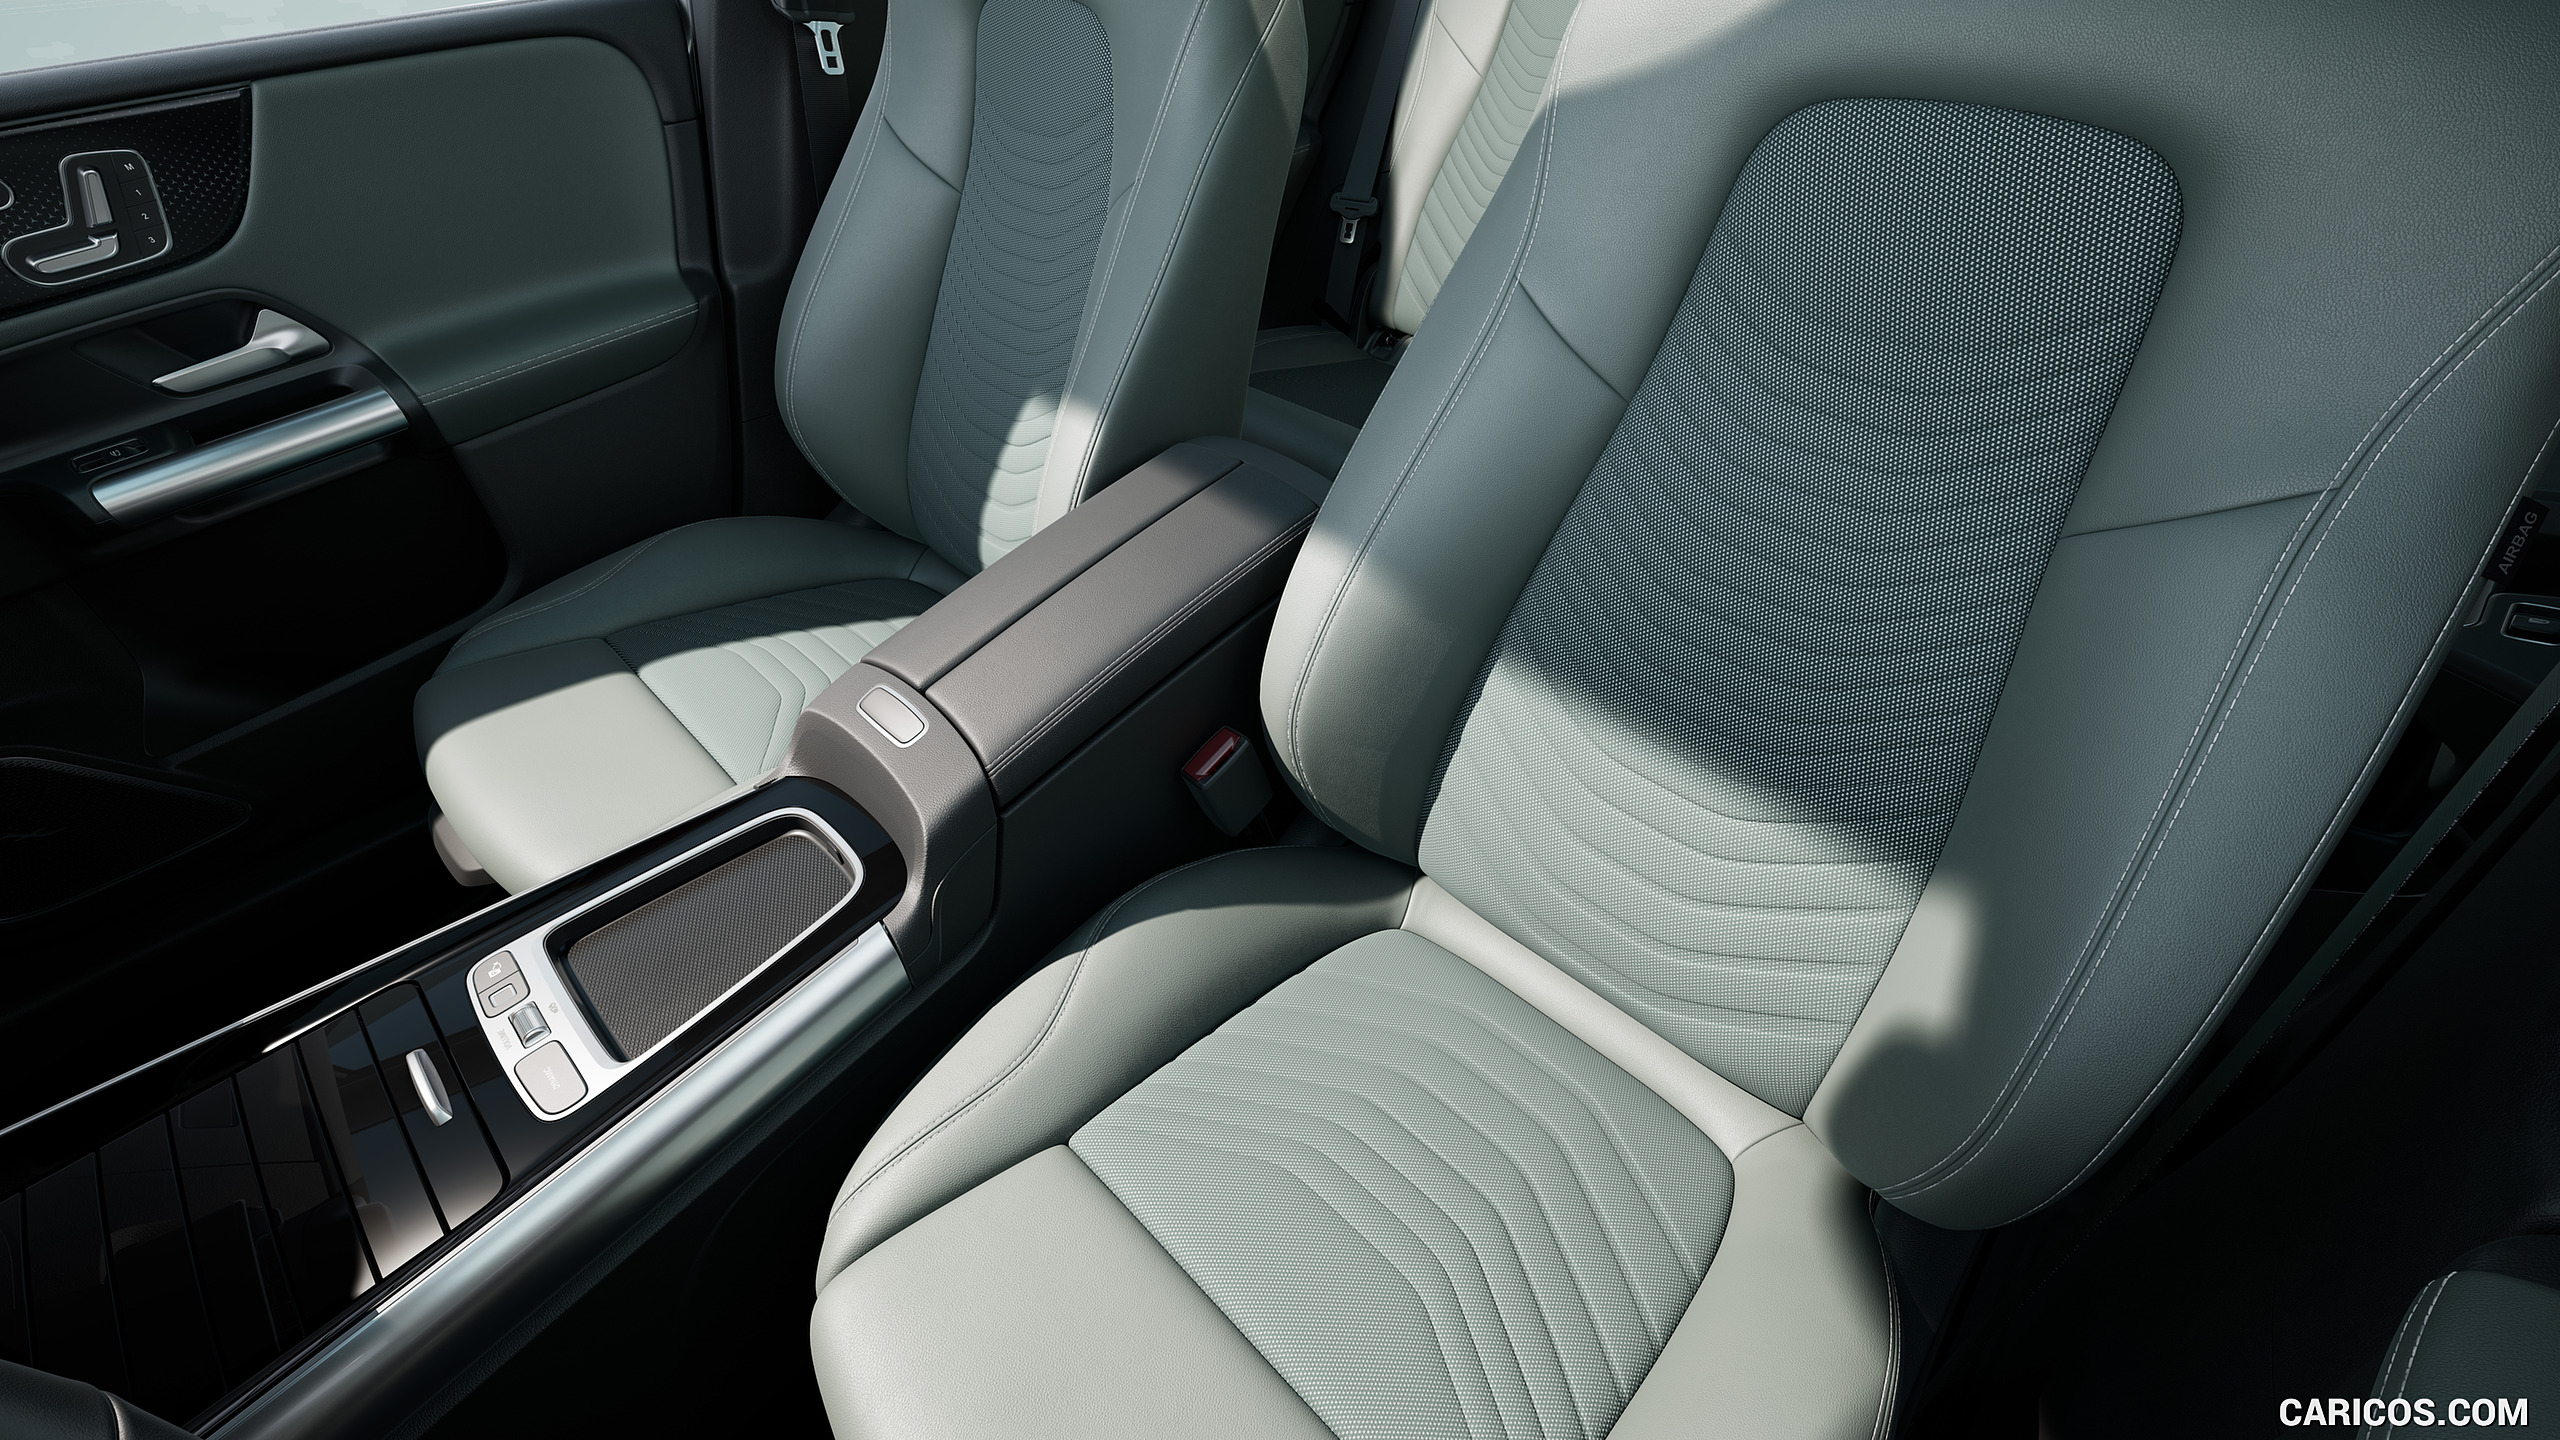 2023 Mercedes-Benz B-Class (Color: Digital White) - Interior, Seats, #10 of 10